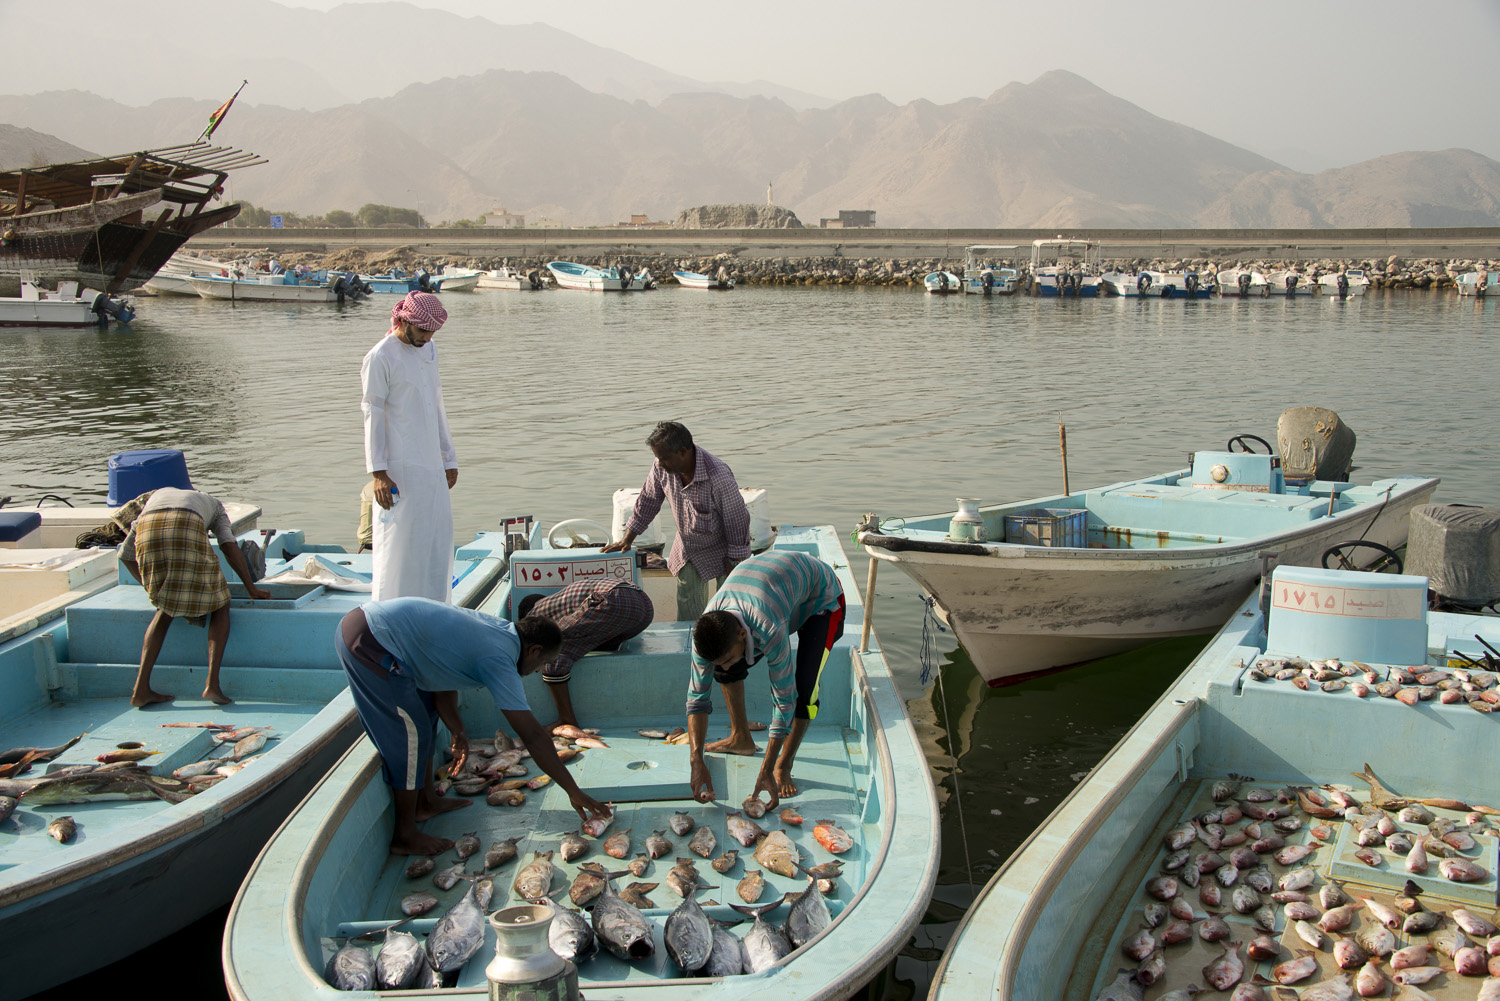 jo-kearney-video-photos-photography-travel-portraits-prints-for-sale-Oman-Dibba-fishing-port-traditional-port.jpg